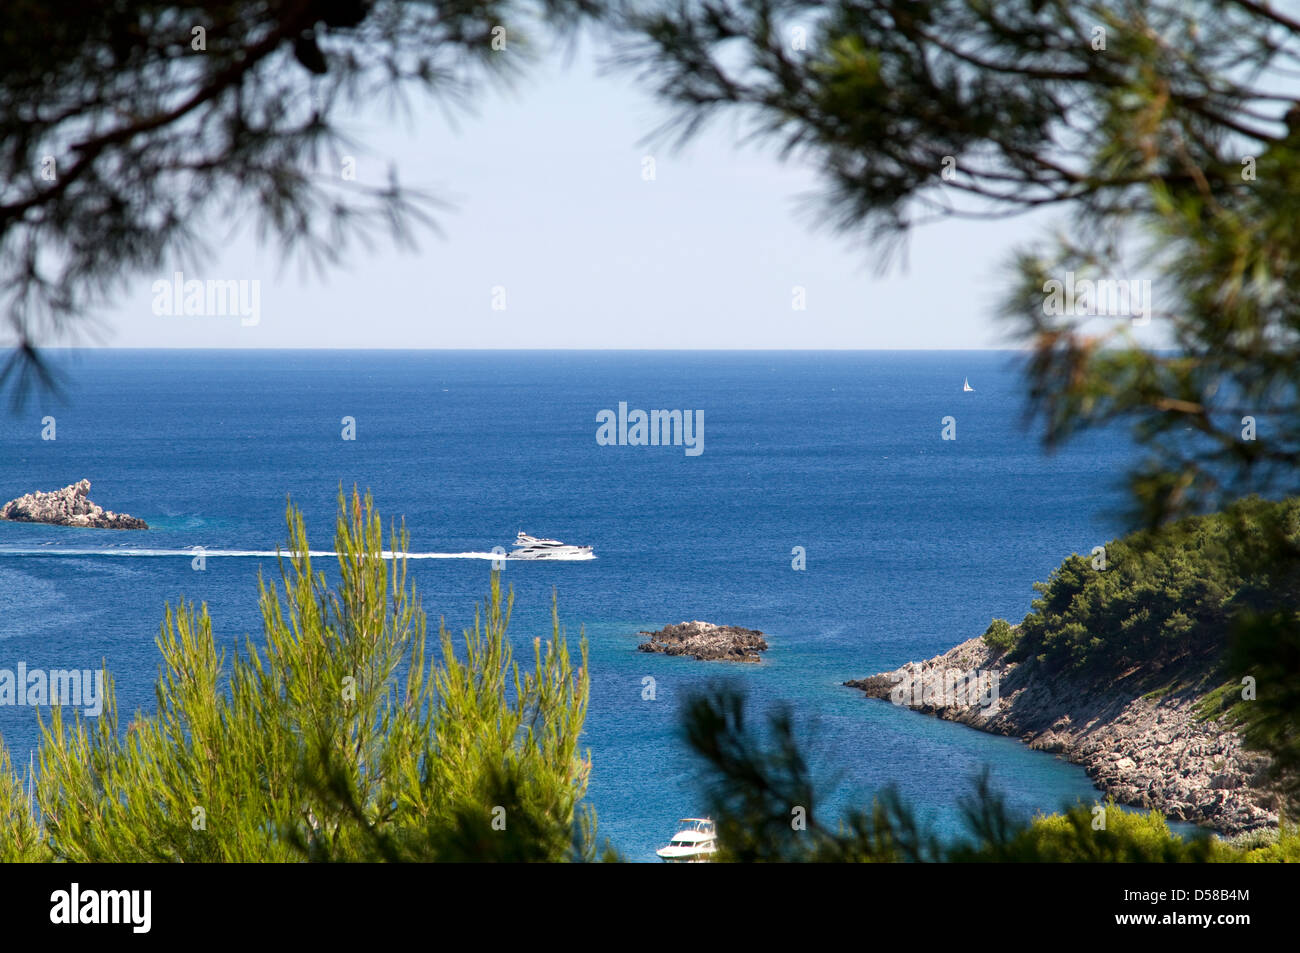 Sunj bay on the island of Lopud, Croatia Stock Photo